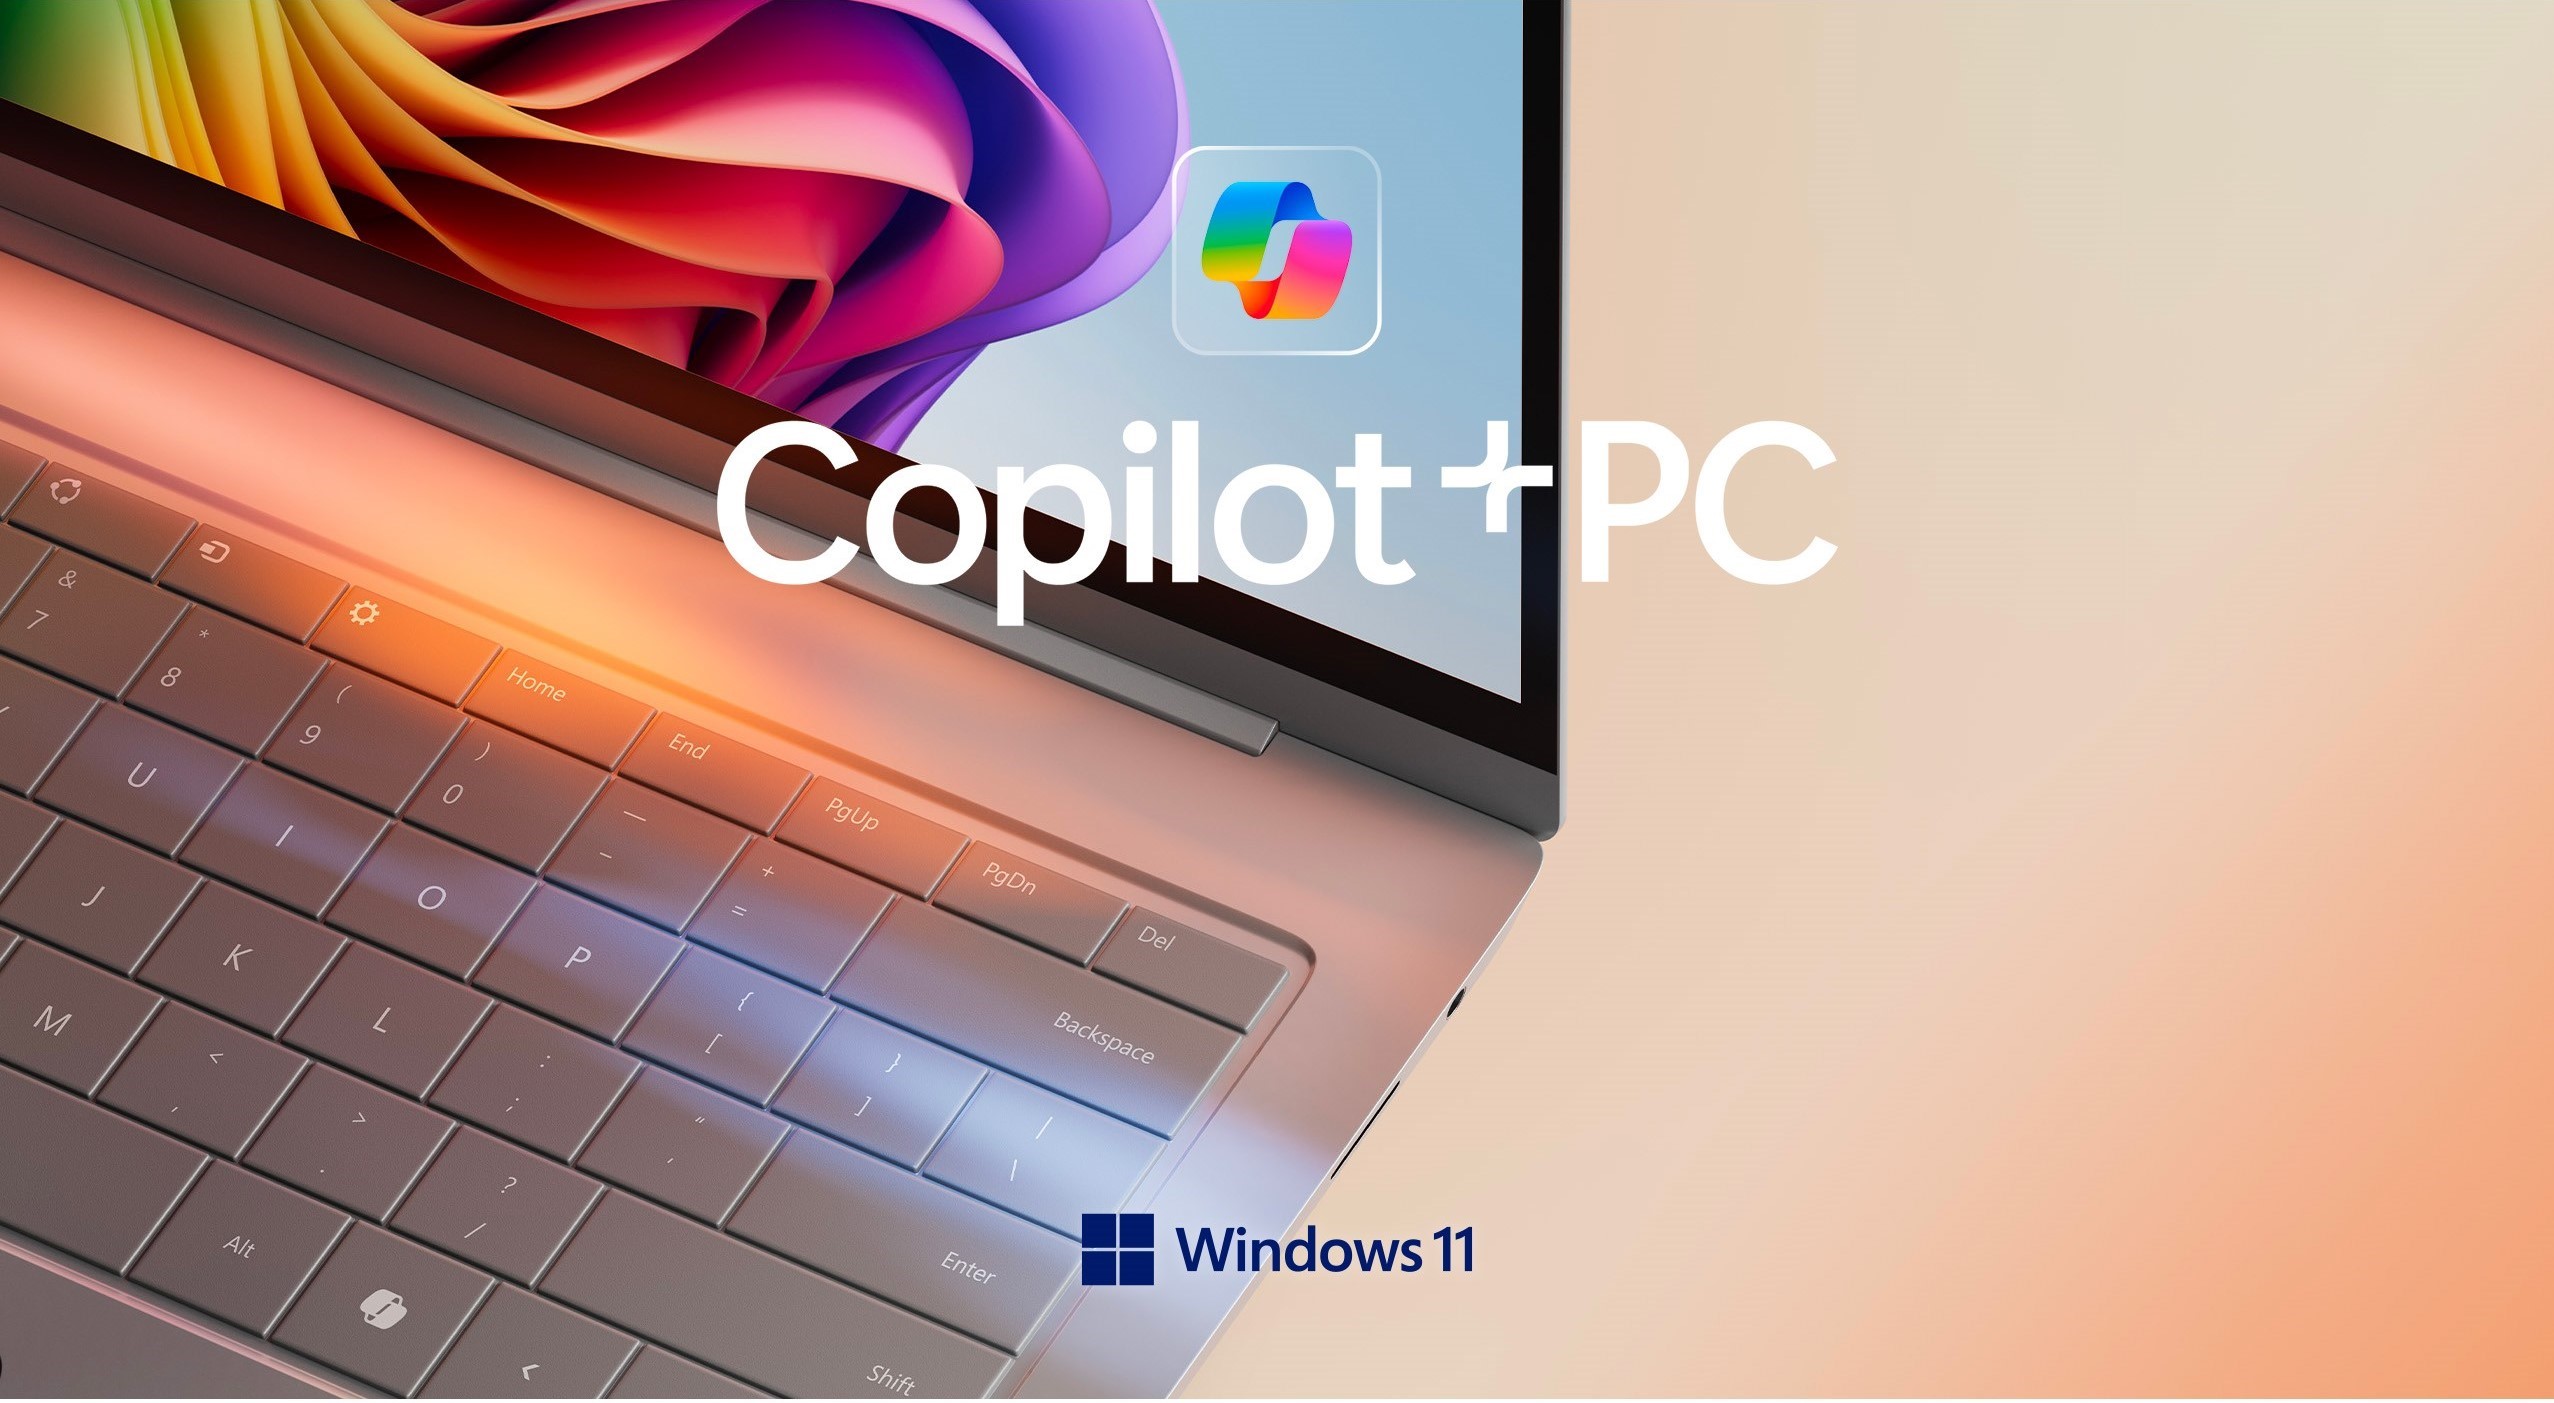 Offerte Microsoft Copilot + PC